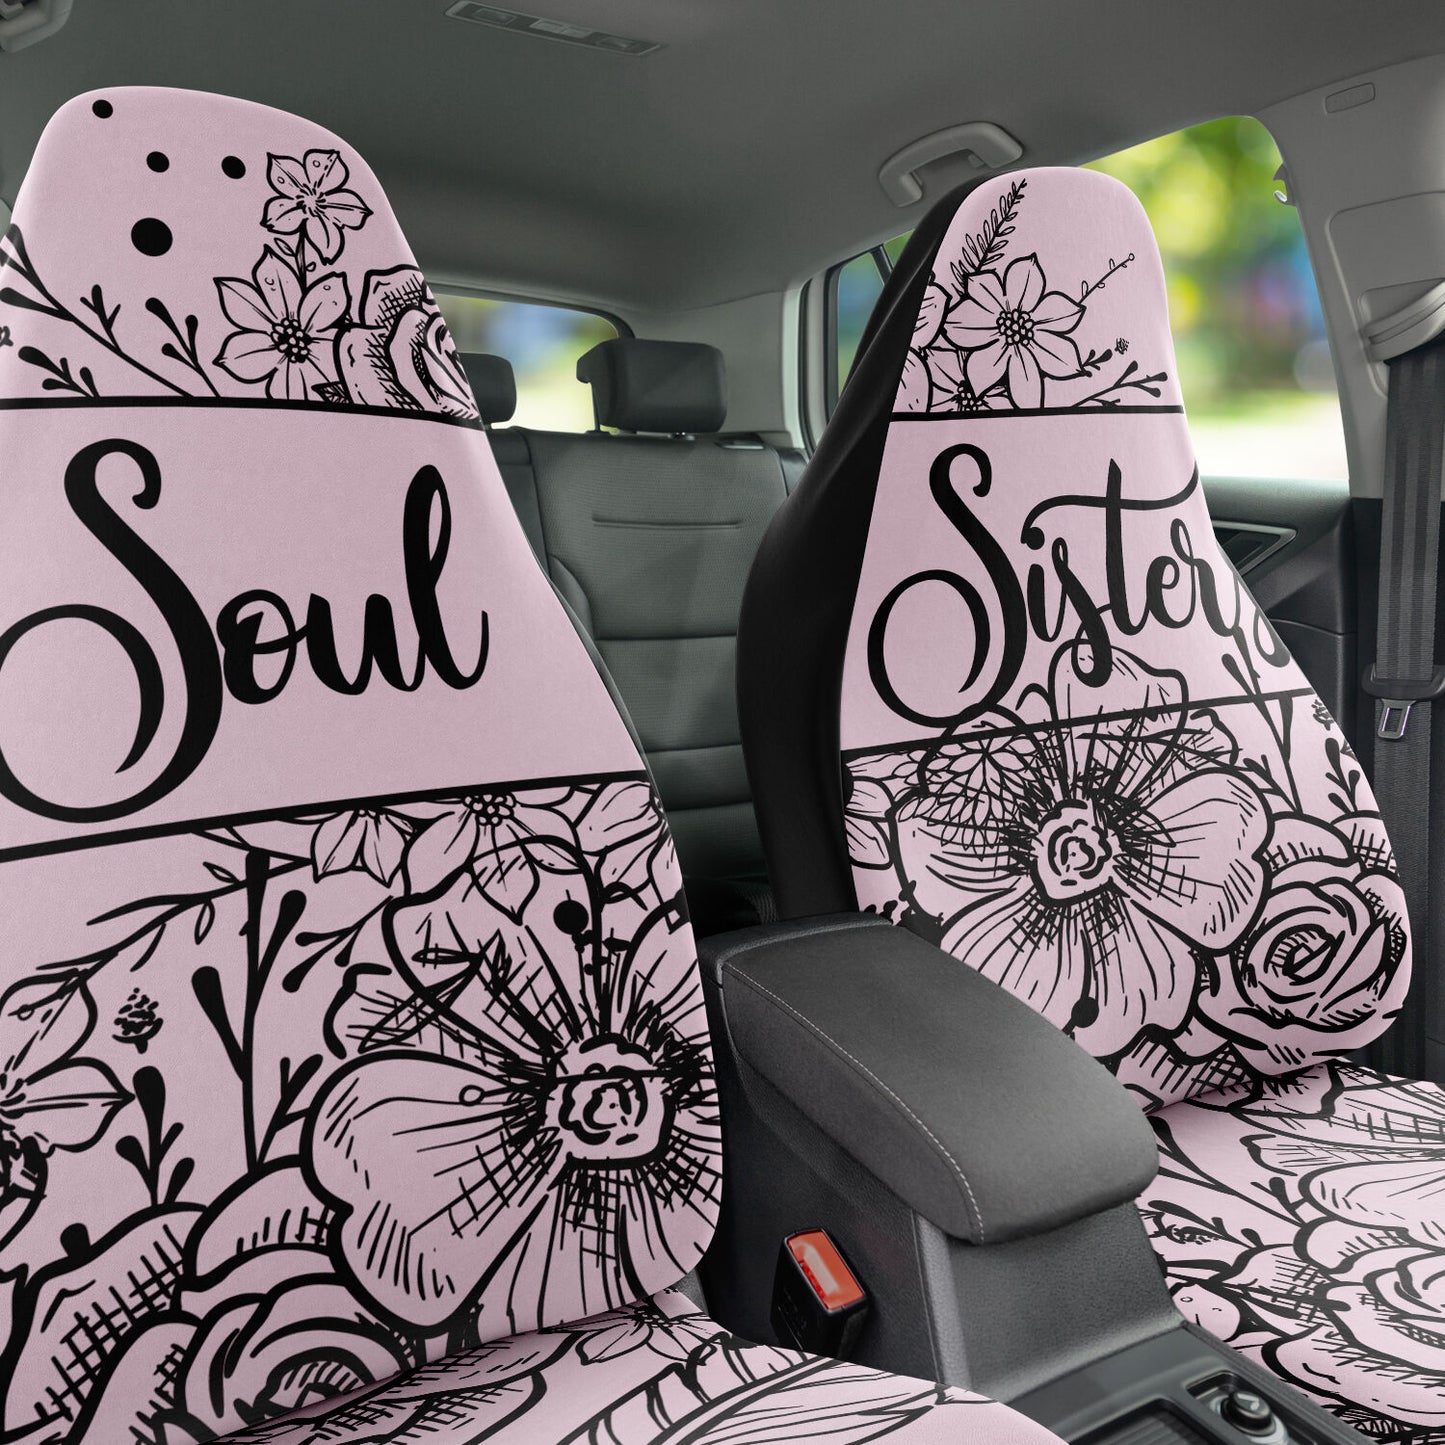 Soul Sisters Car Seat Covers